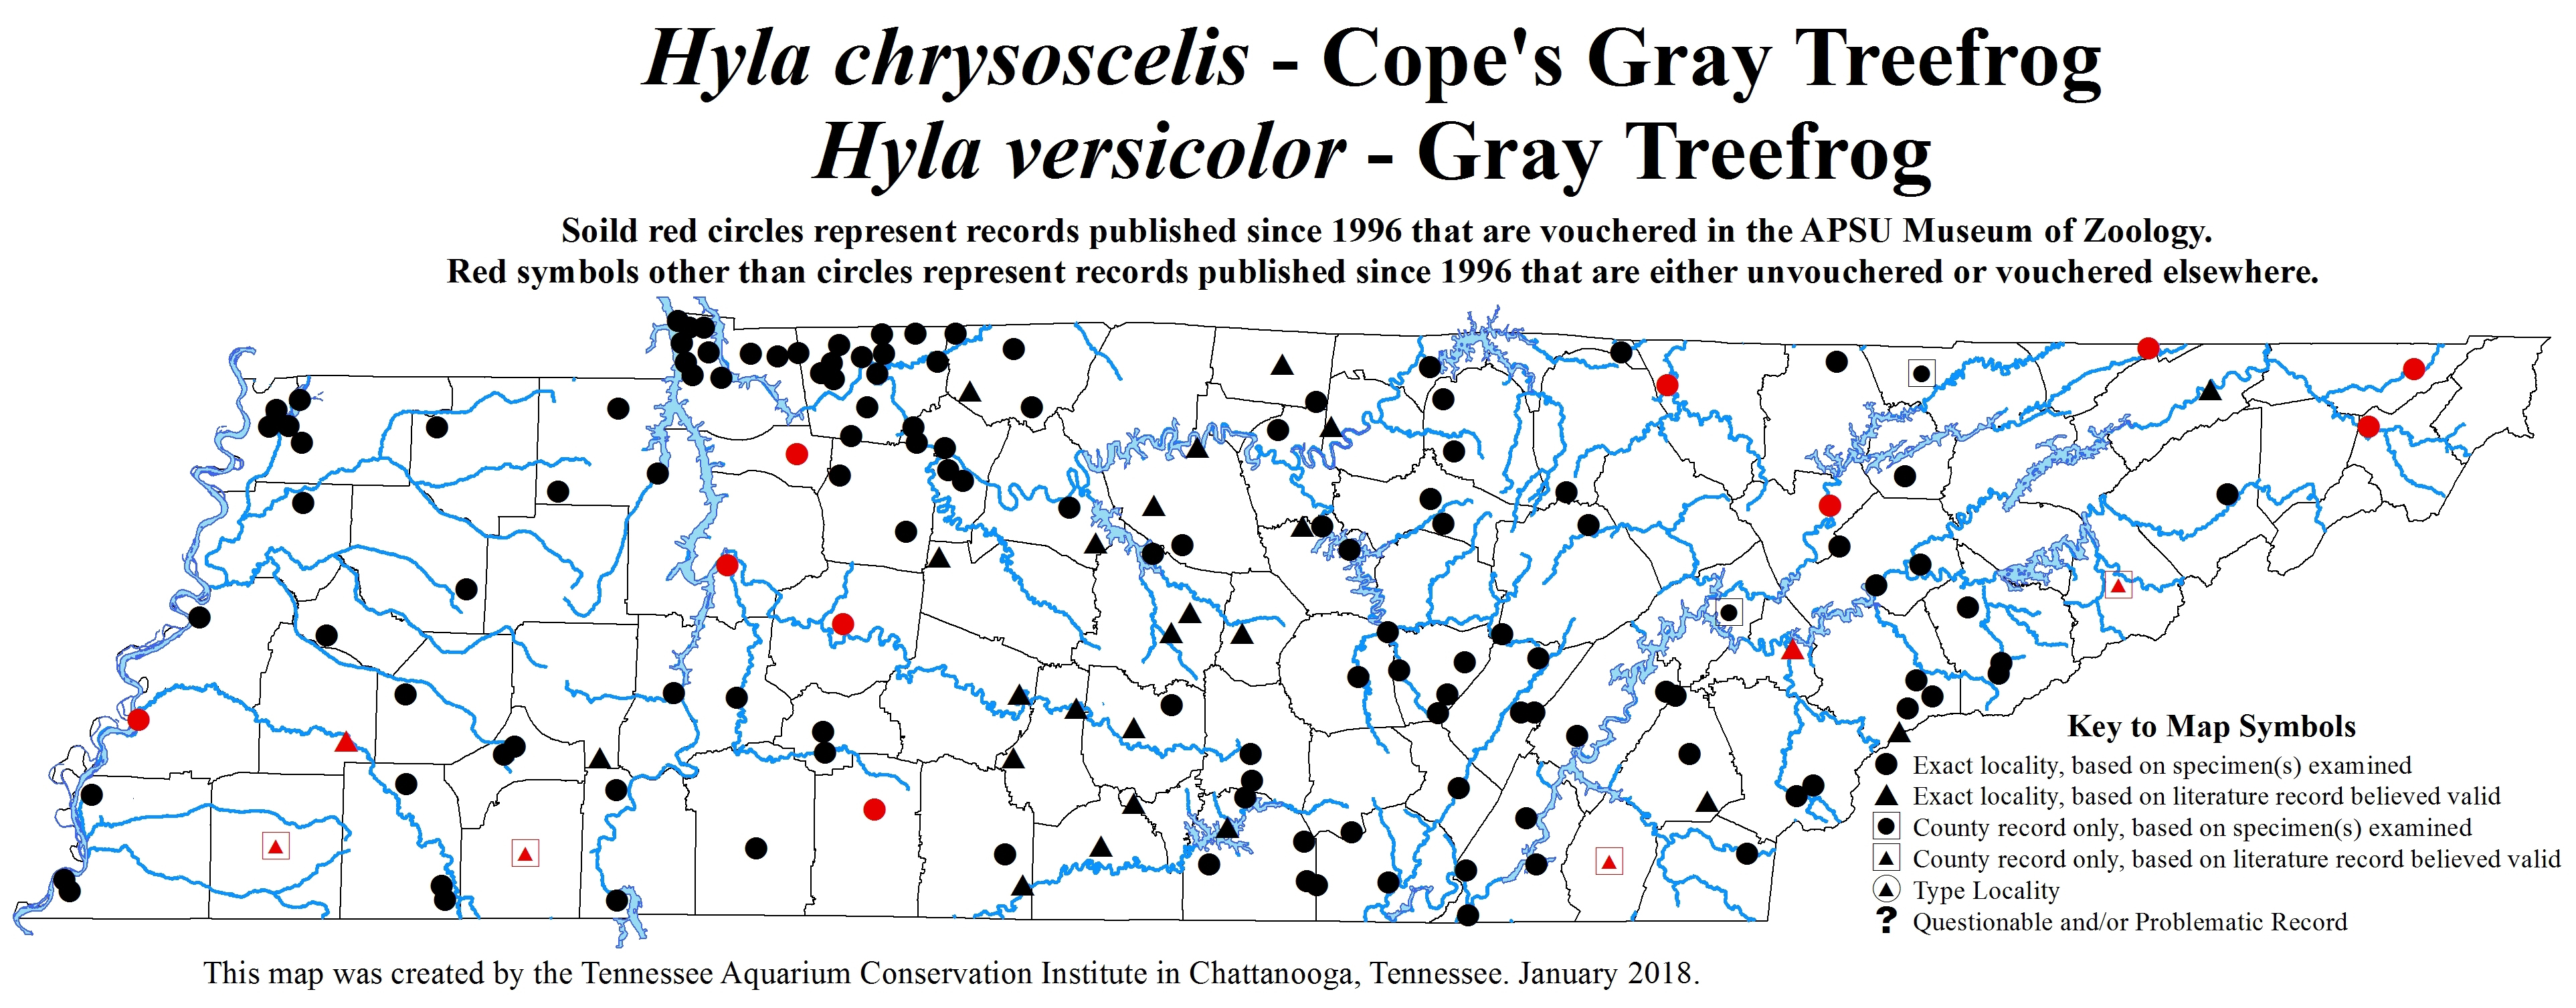 Update to Hyla versicolor/chrysoscelis